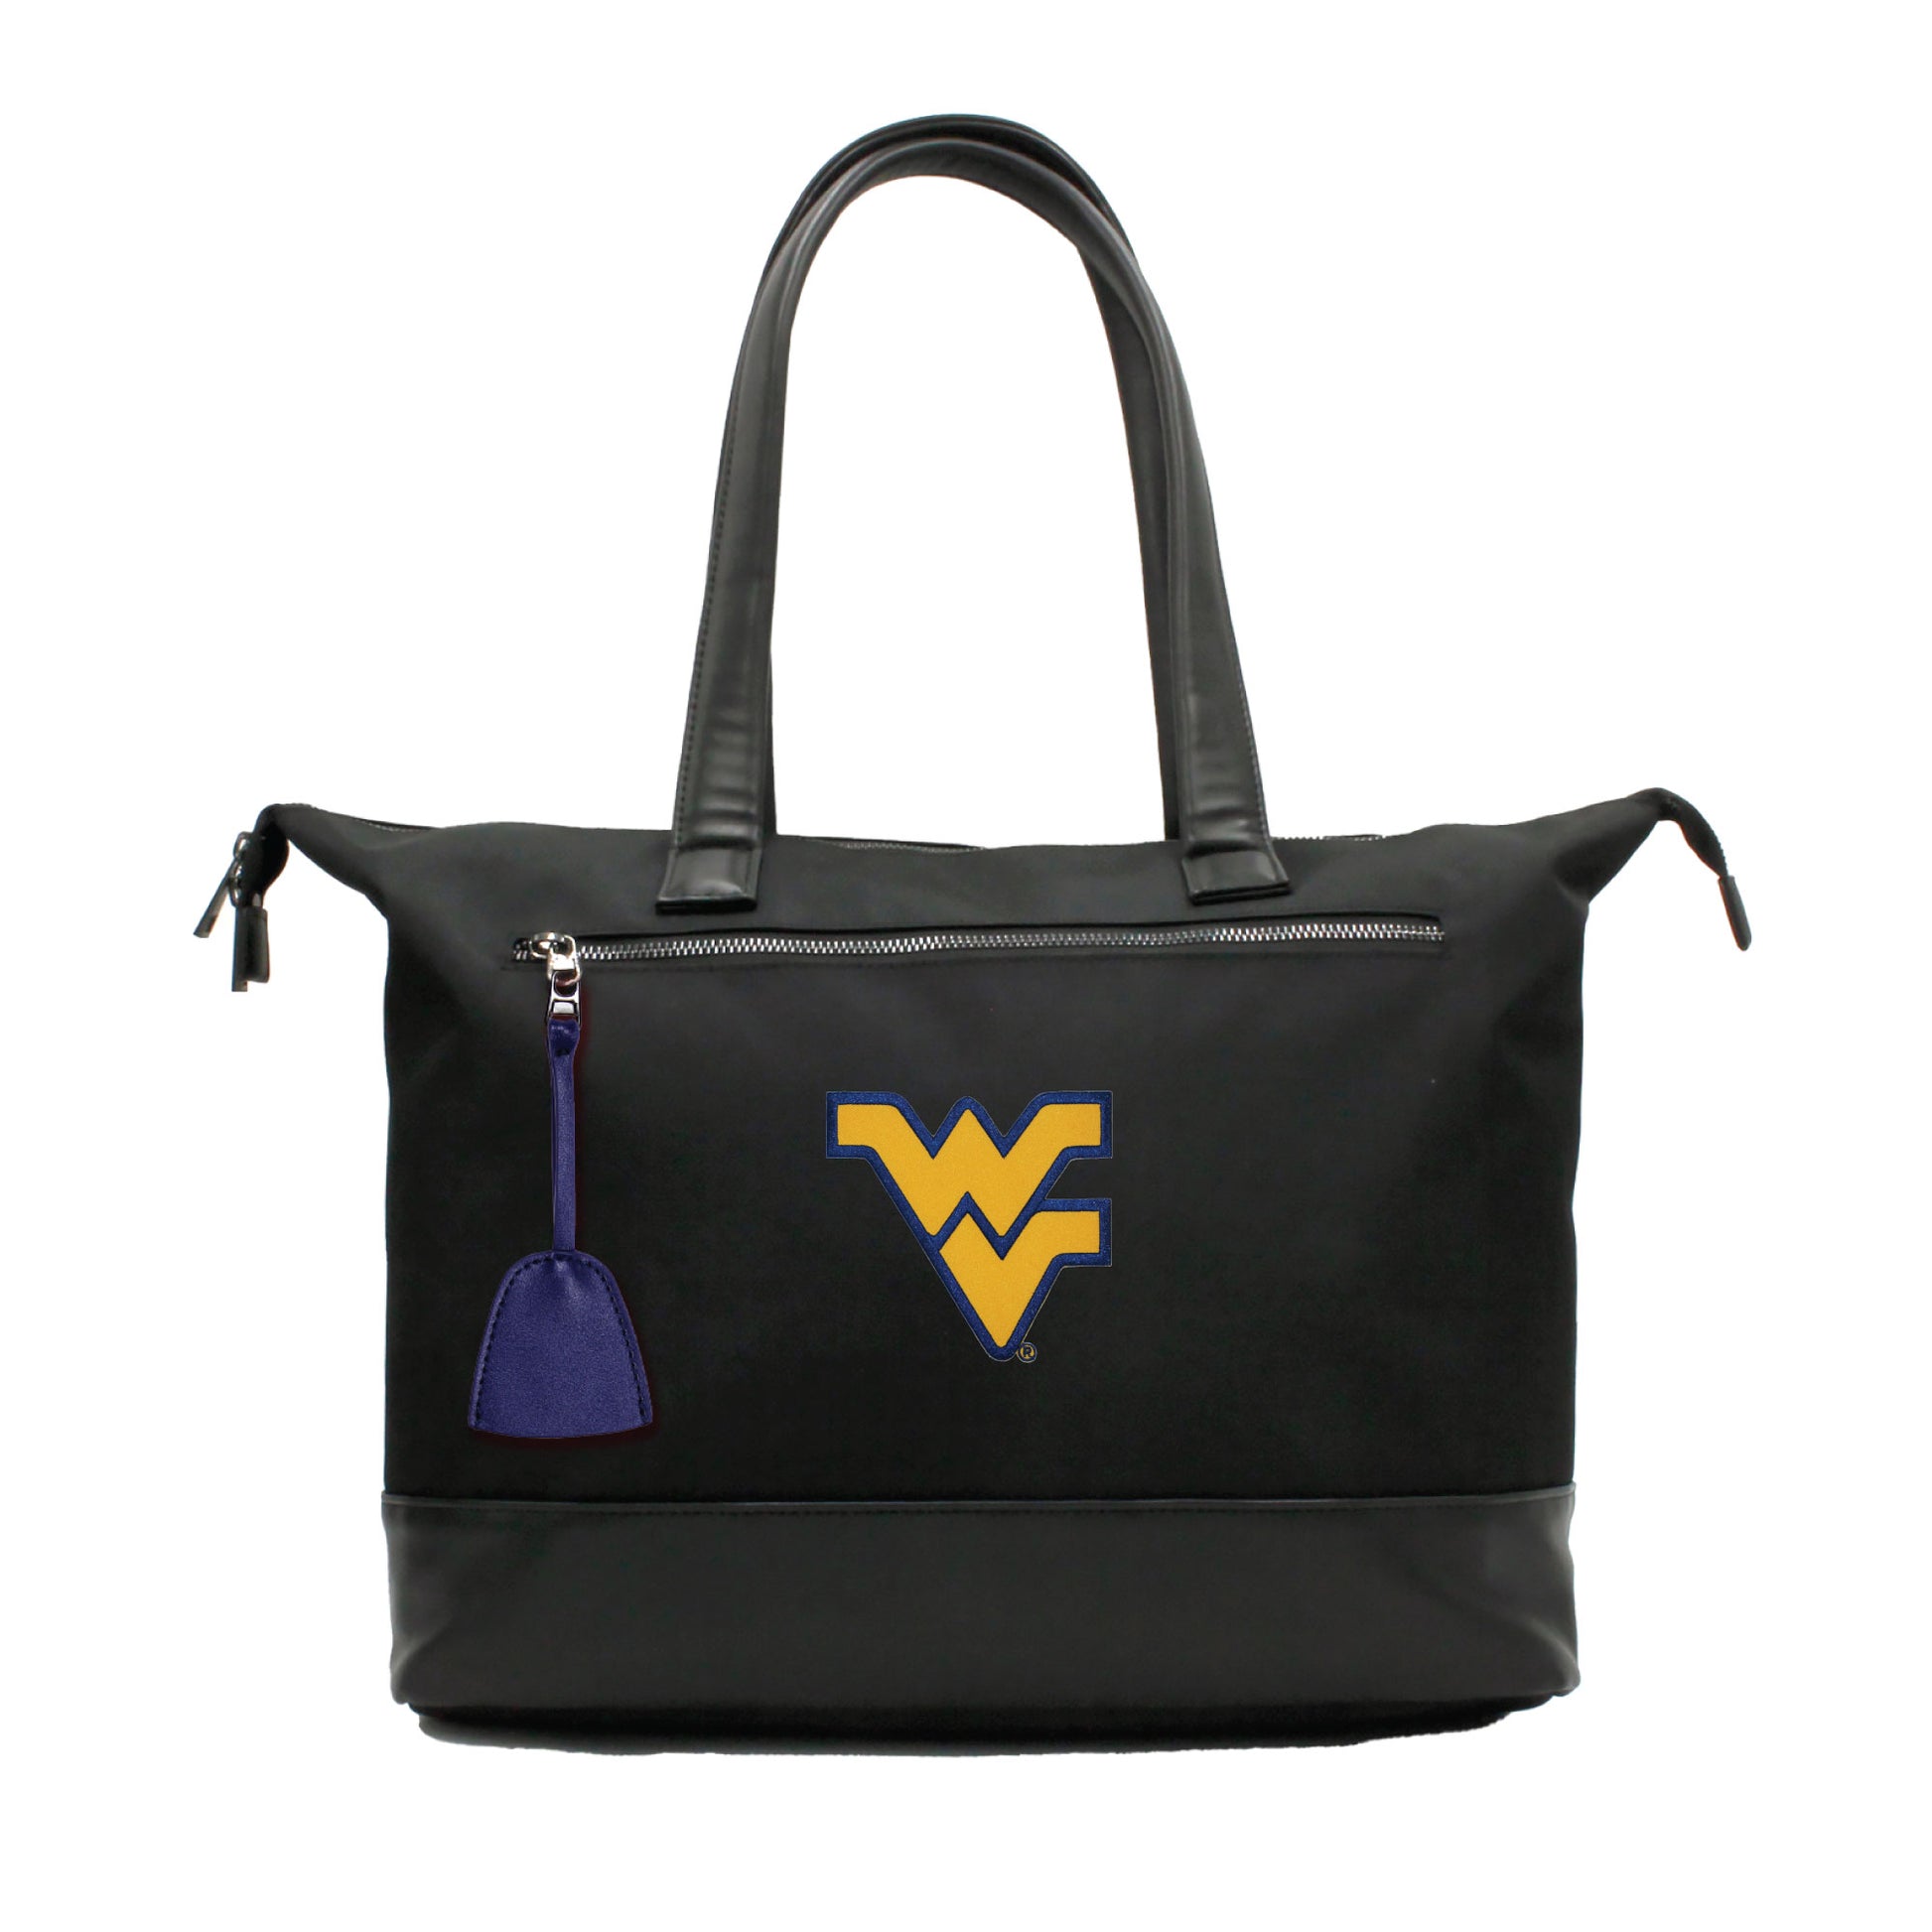 West Virginia Mountaineers Premium Laptop Tote Bag